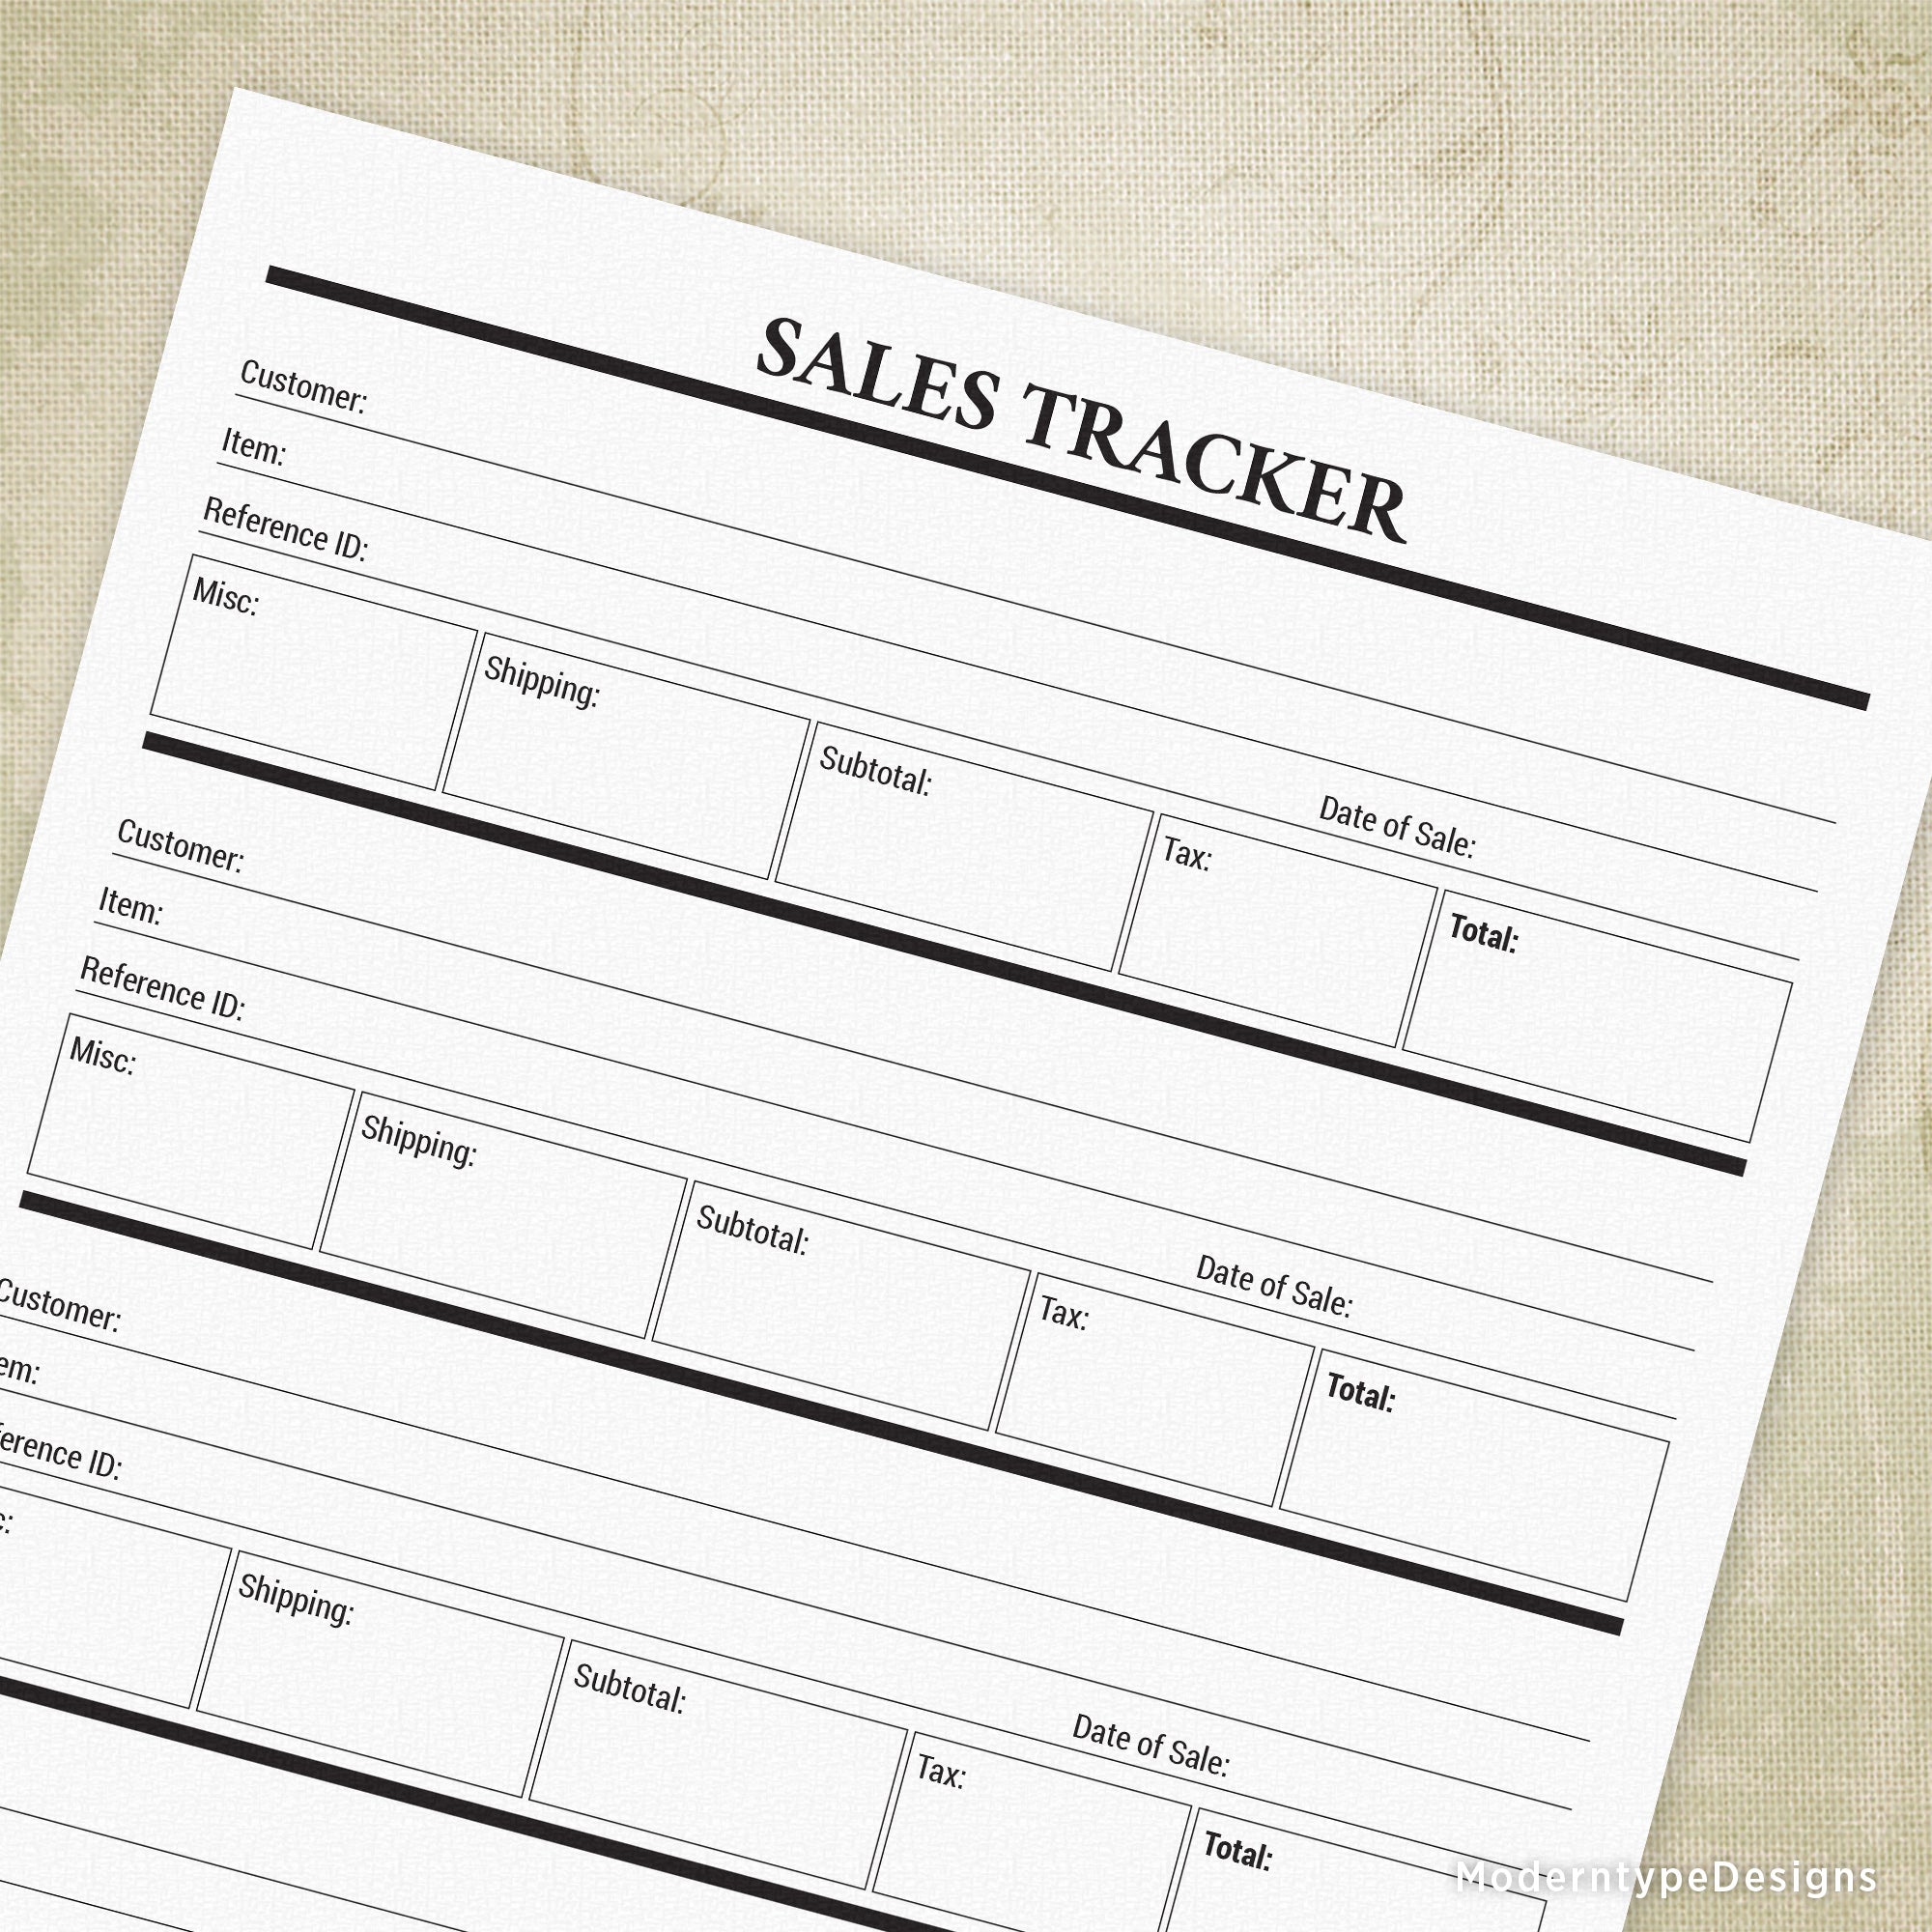 Sales Tracker Printable, #1